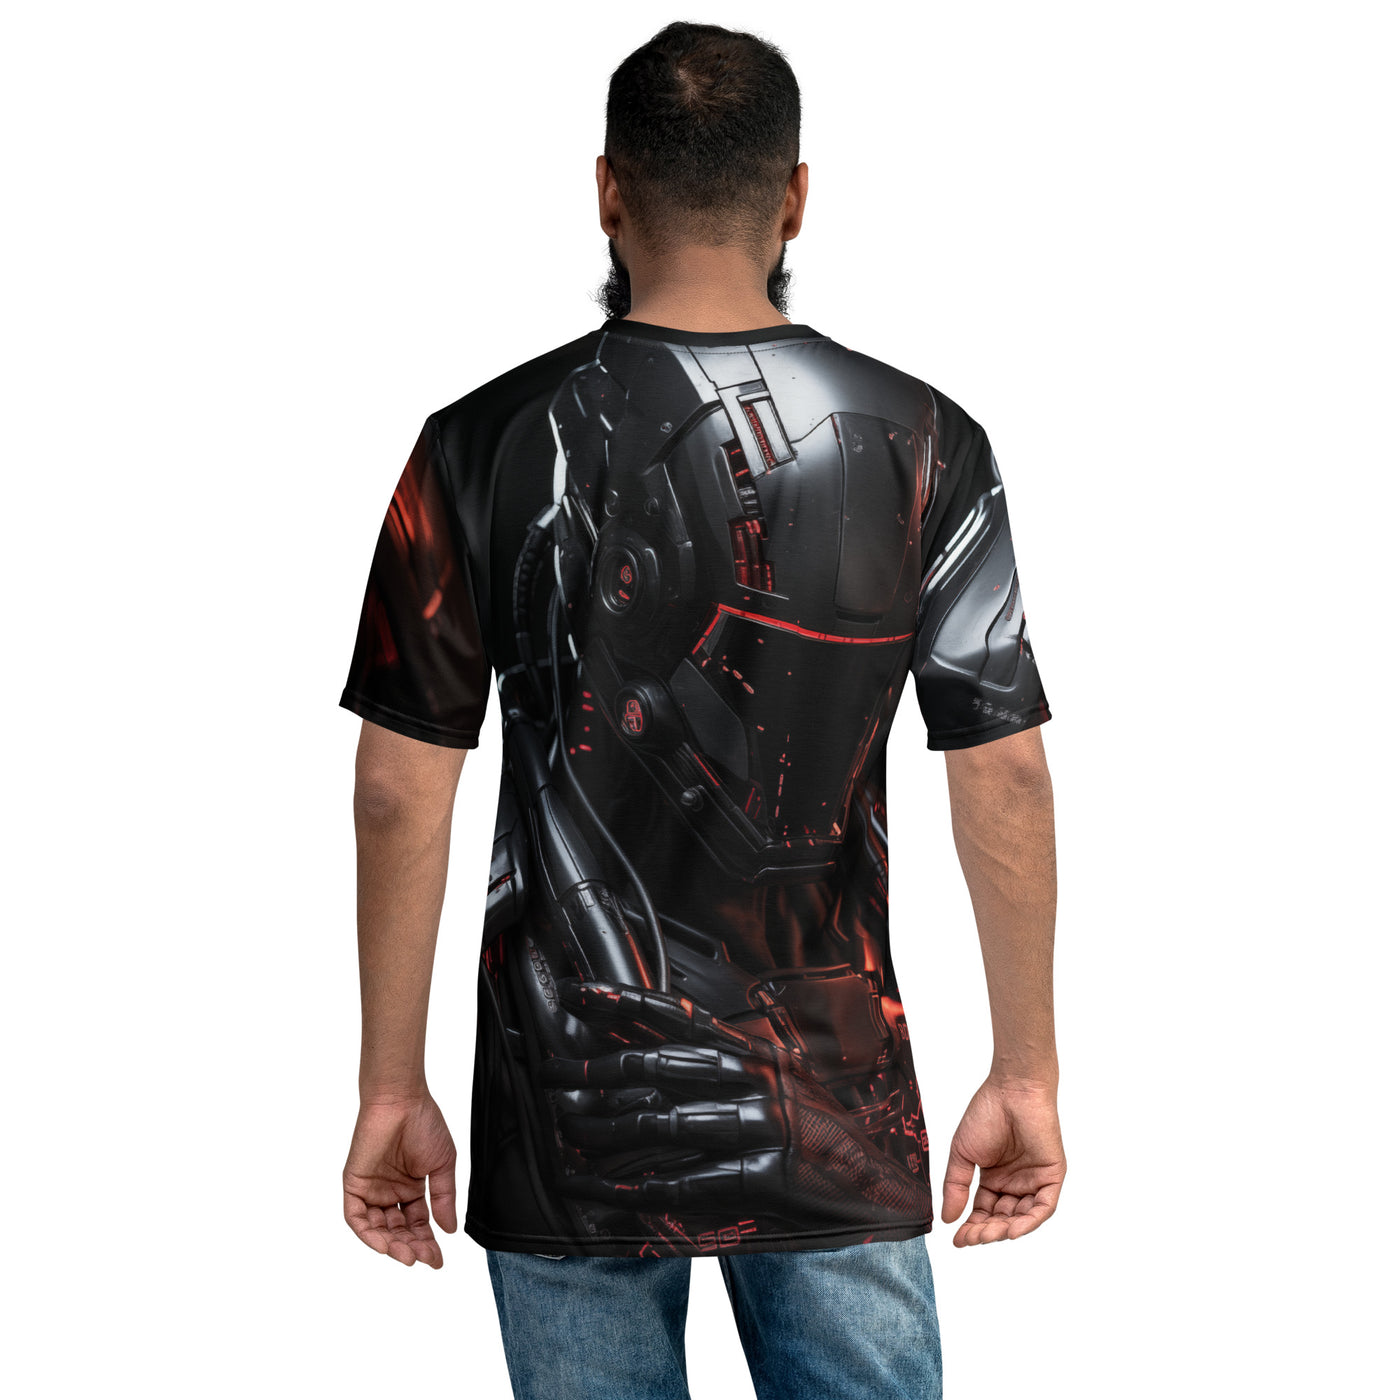 CyberArms Warrior v41 - Men's t-shirt